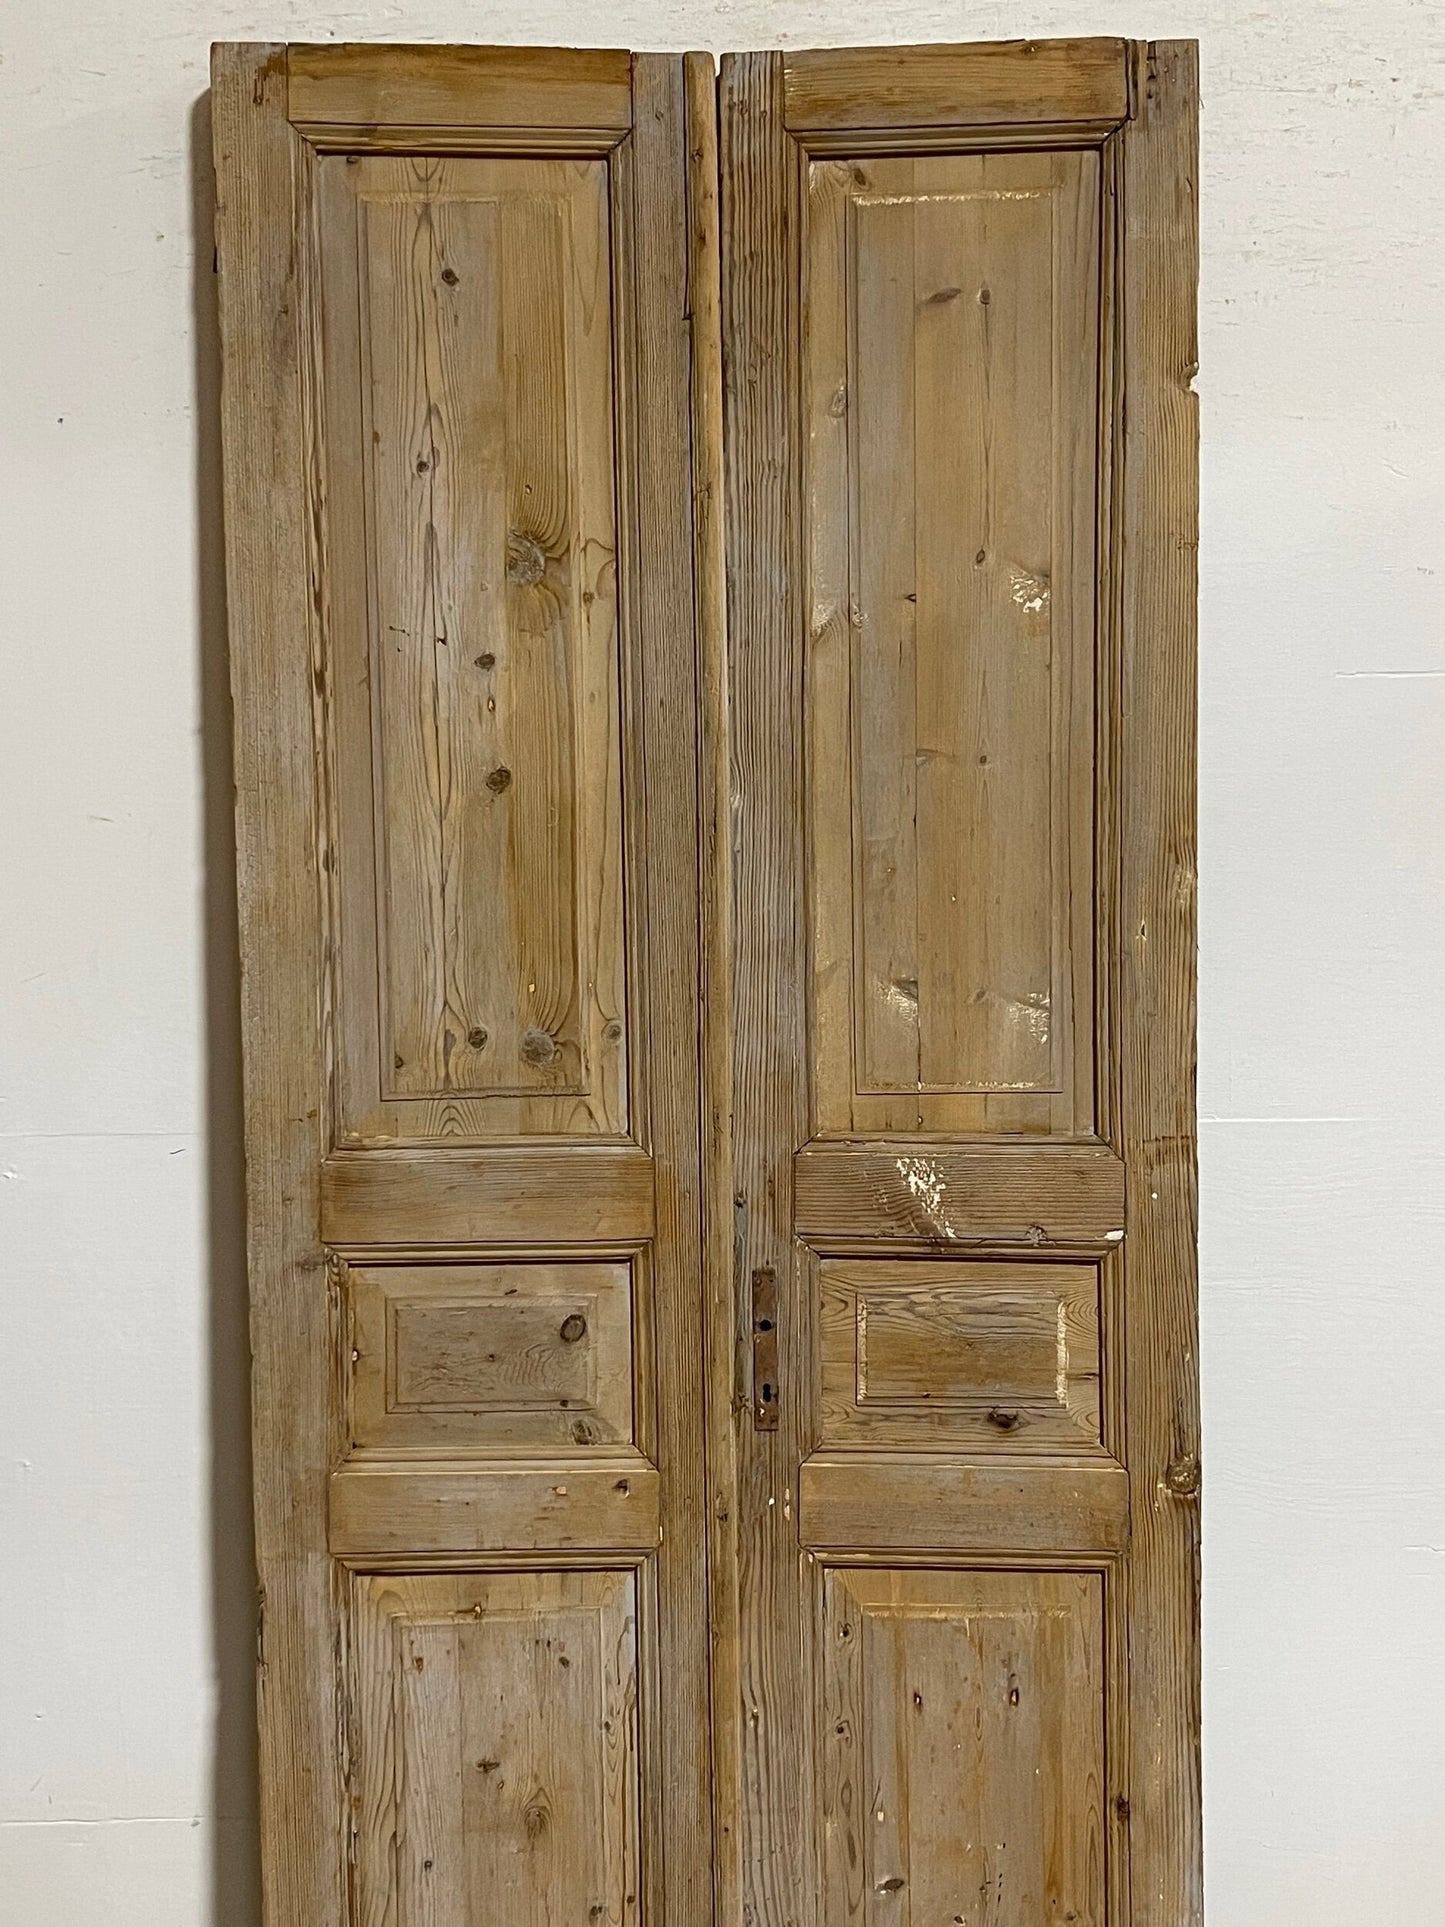 Antique French panel doors (92.75x39.25) I156